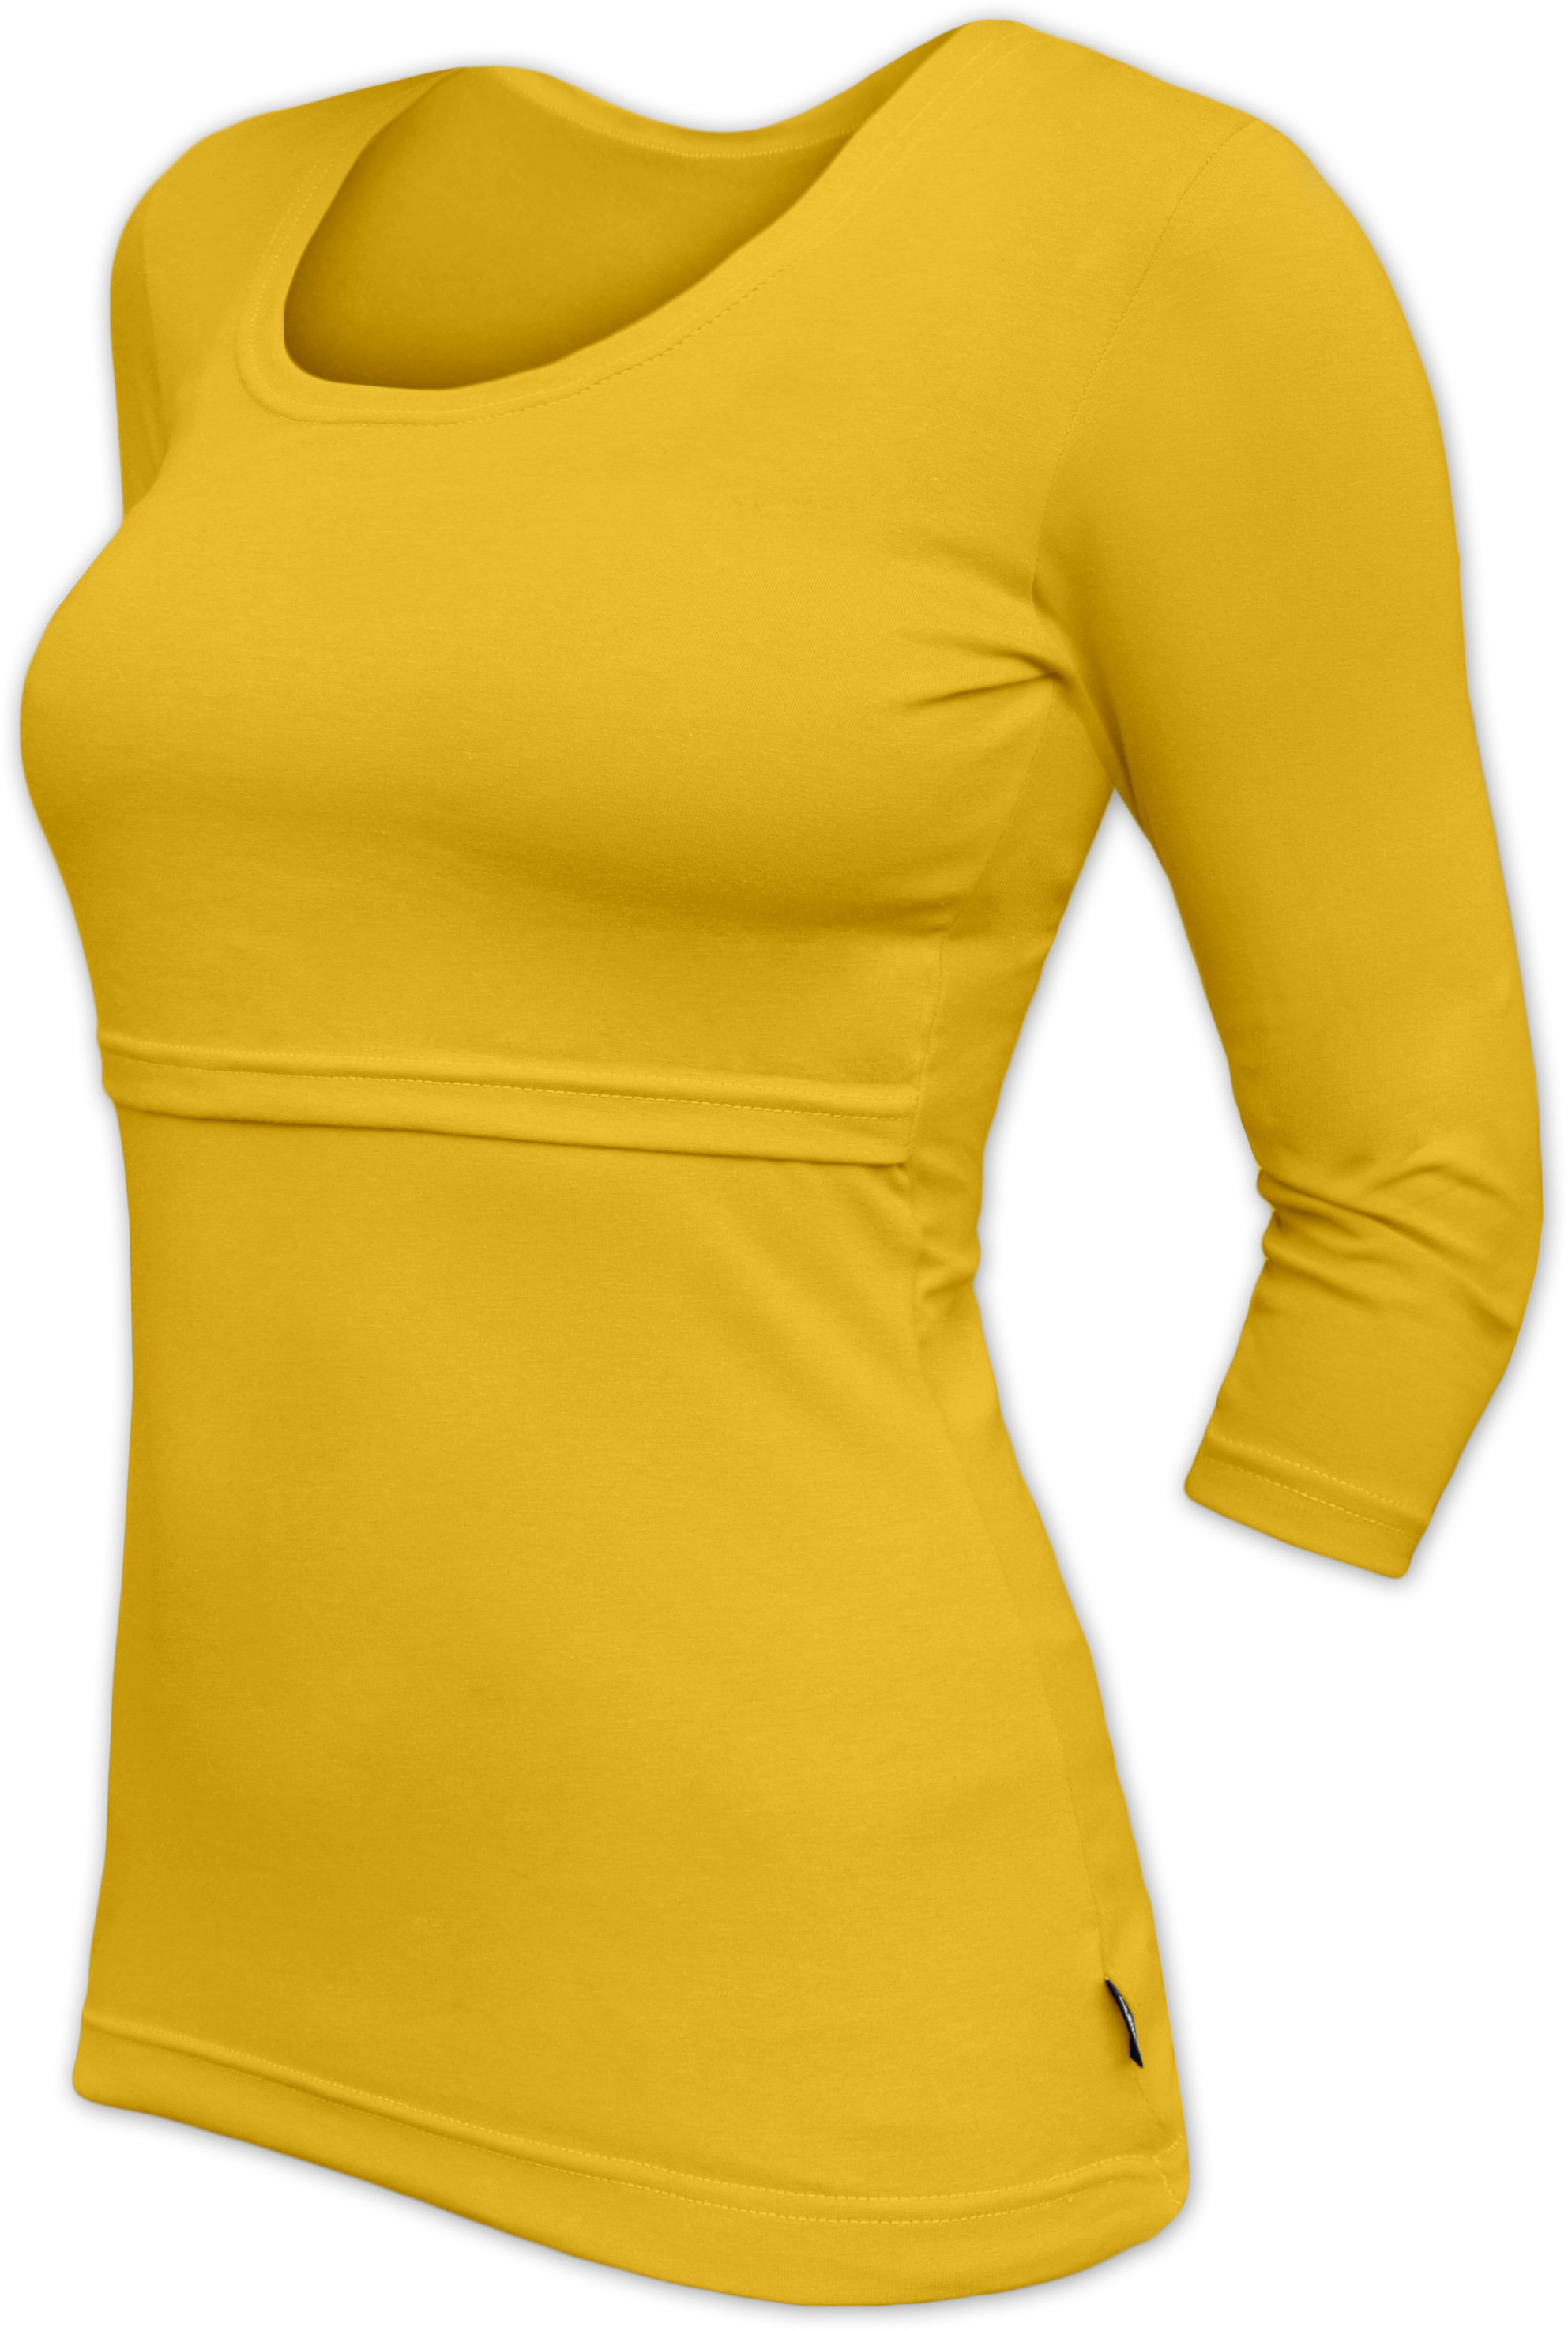 KATERINA- breast-feeding T-shirt 01, 3/4 sleeves, YELLOW-ORANGE S/M